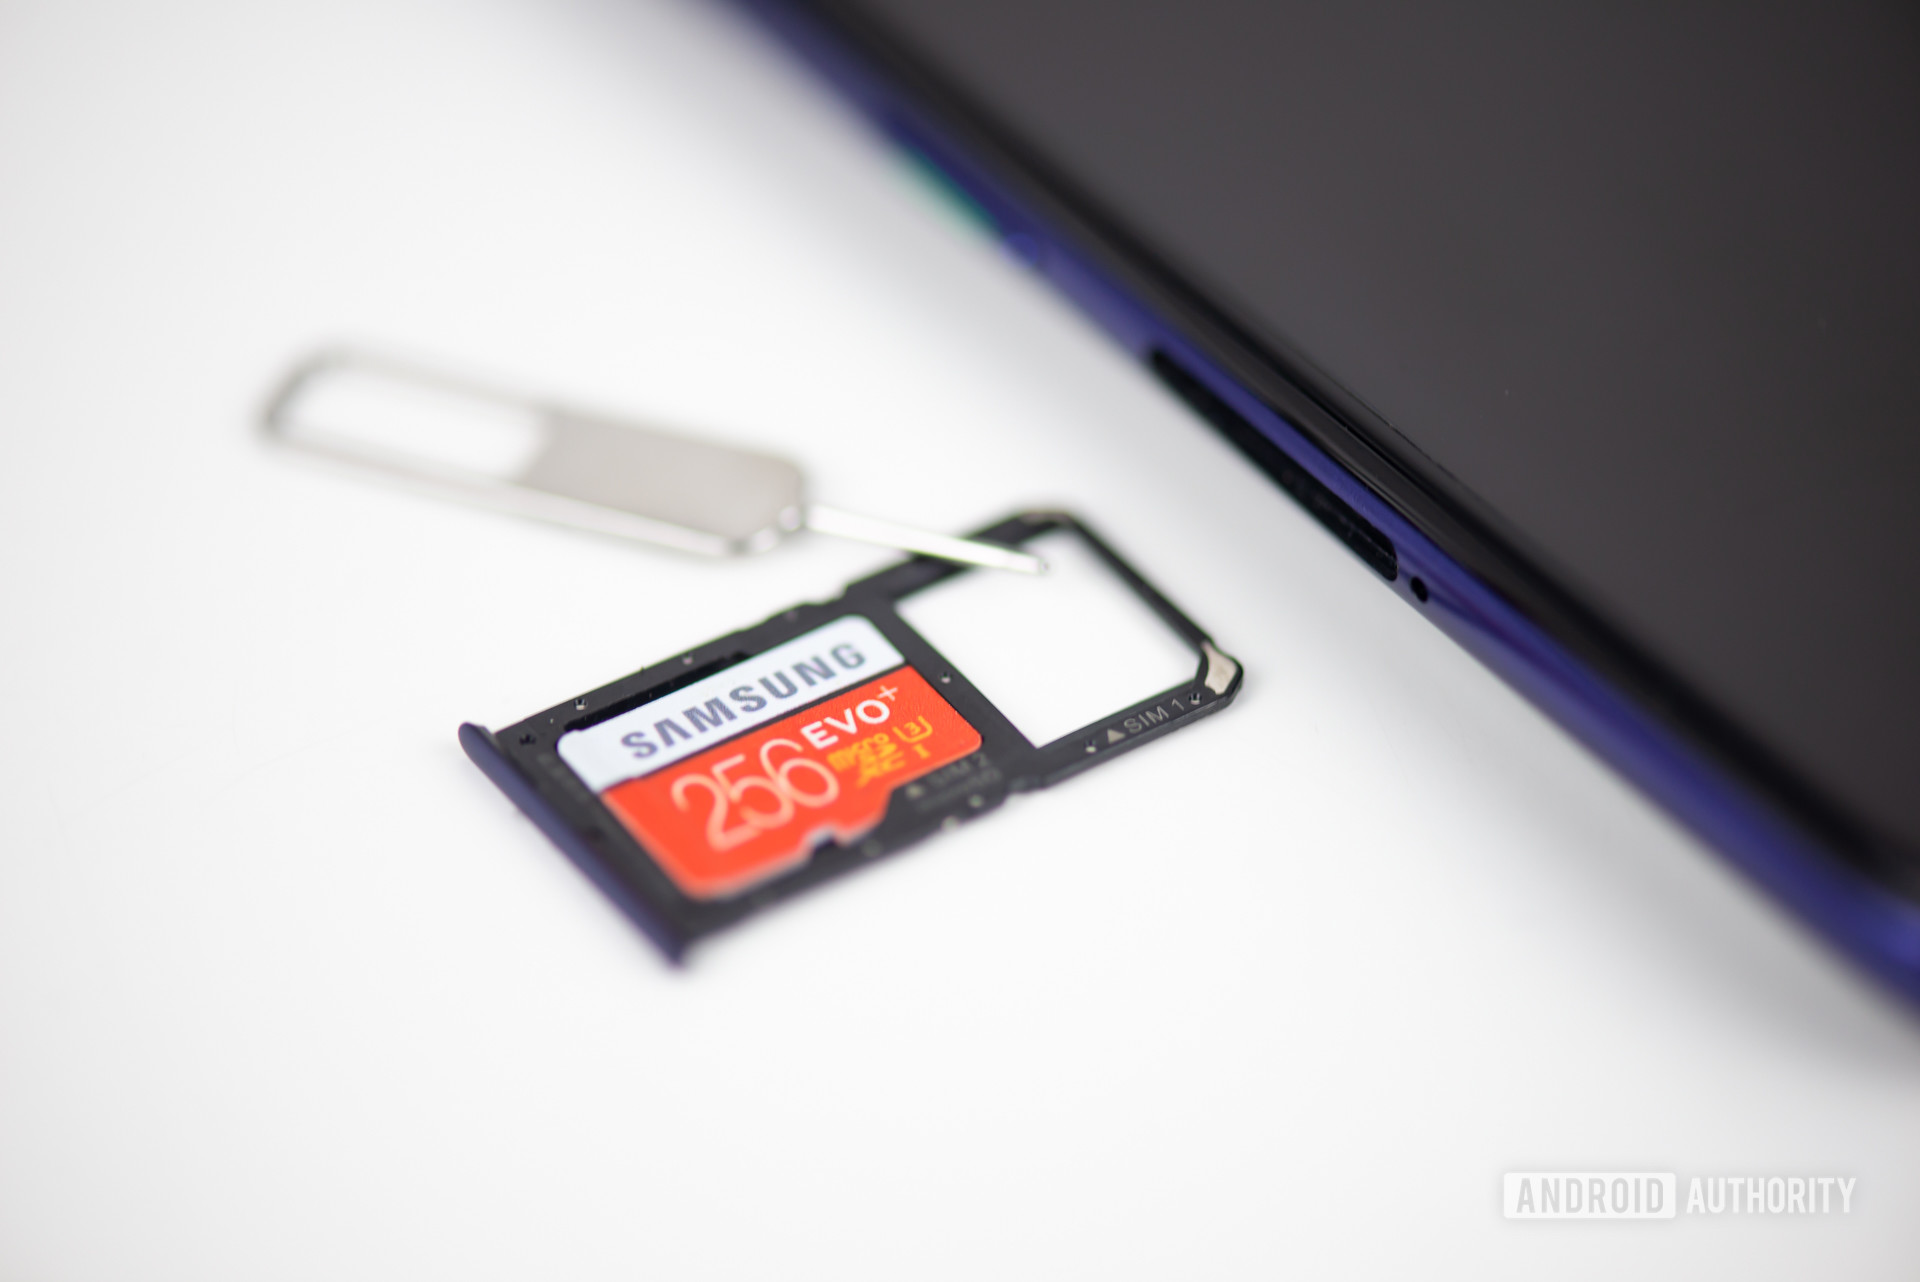 Fente pour carte MicroSD stock photo 3